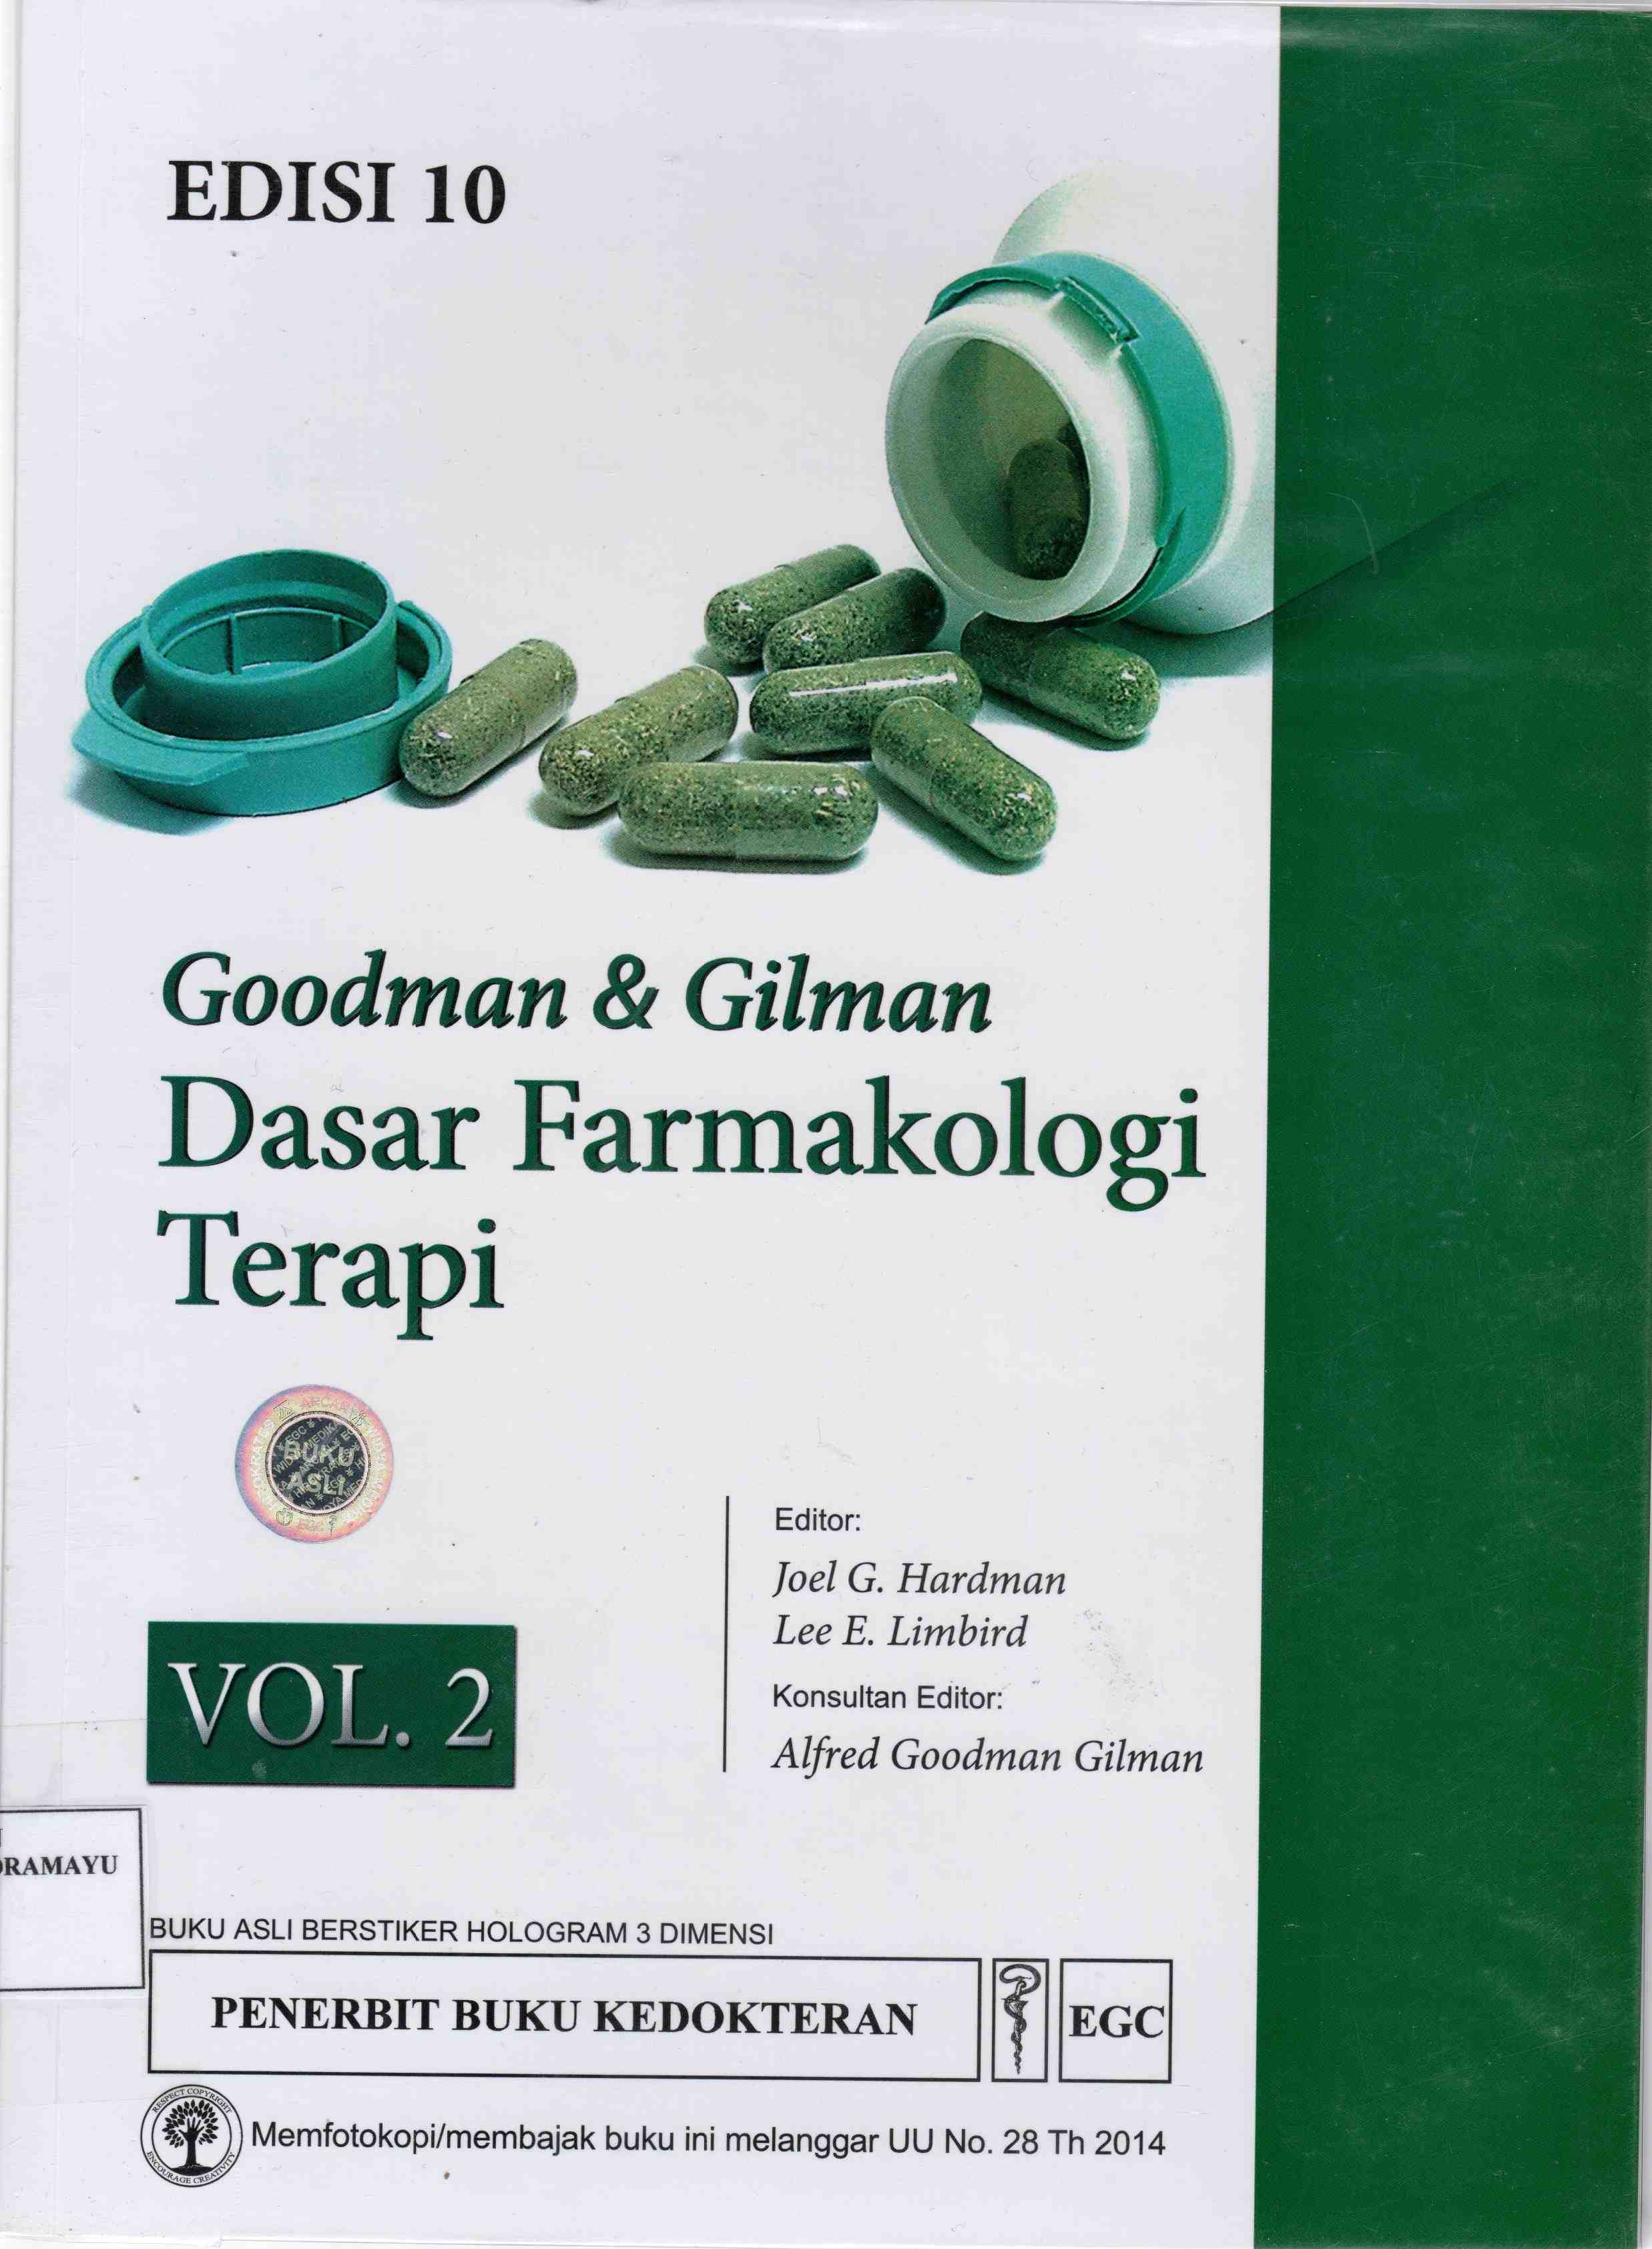 Image of Goodman & Gilman Dasar Farmakologi Terapi Vol 2 ED.10